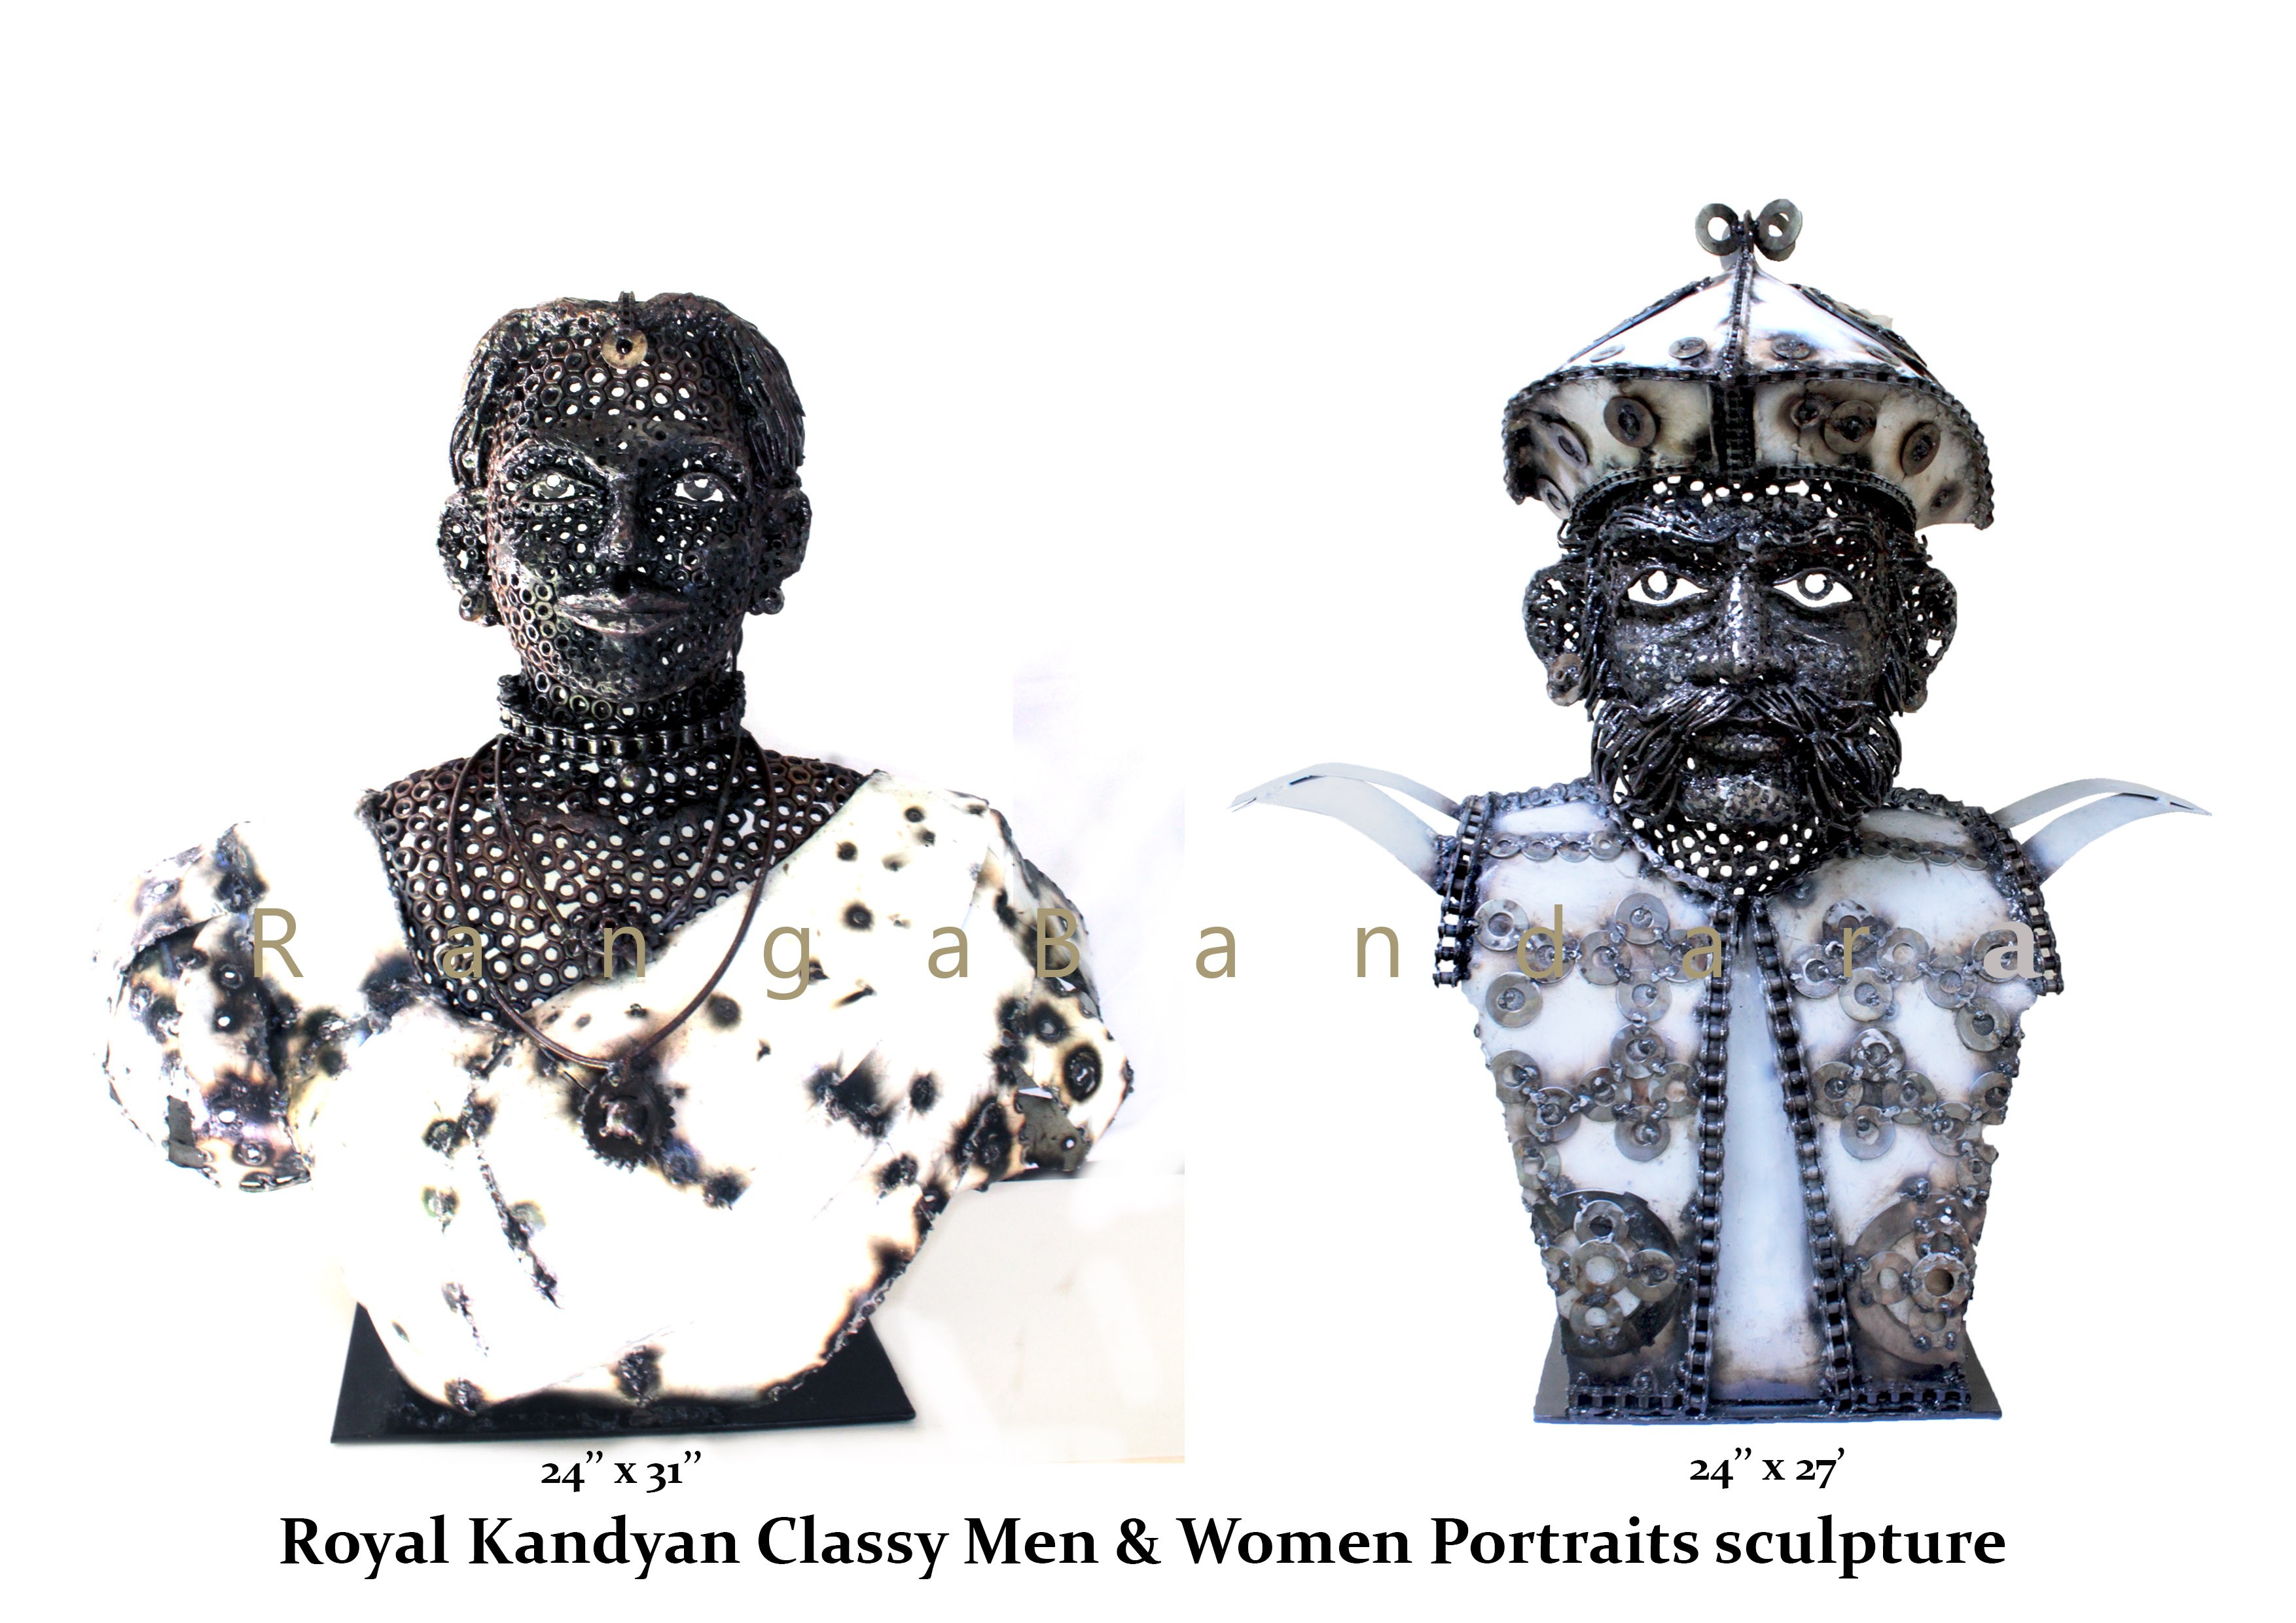 Royal kandyan classy men & women by RANGA BANDARA